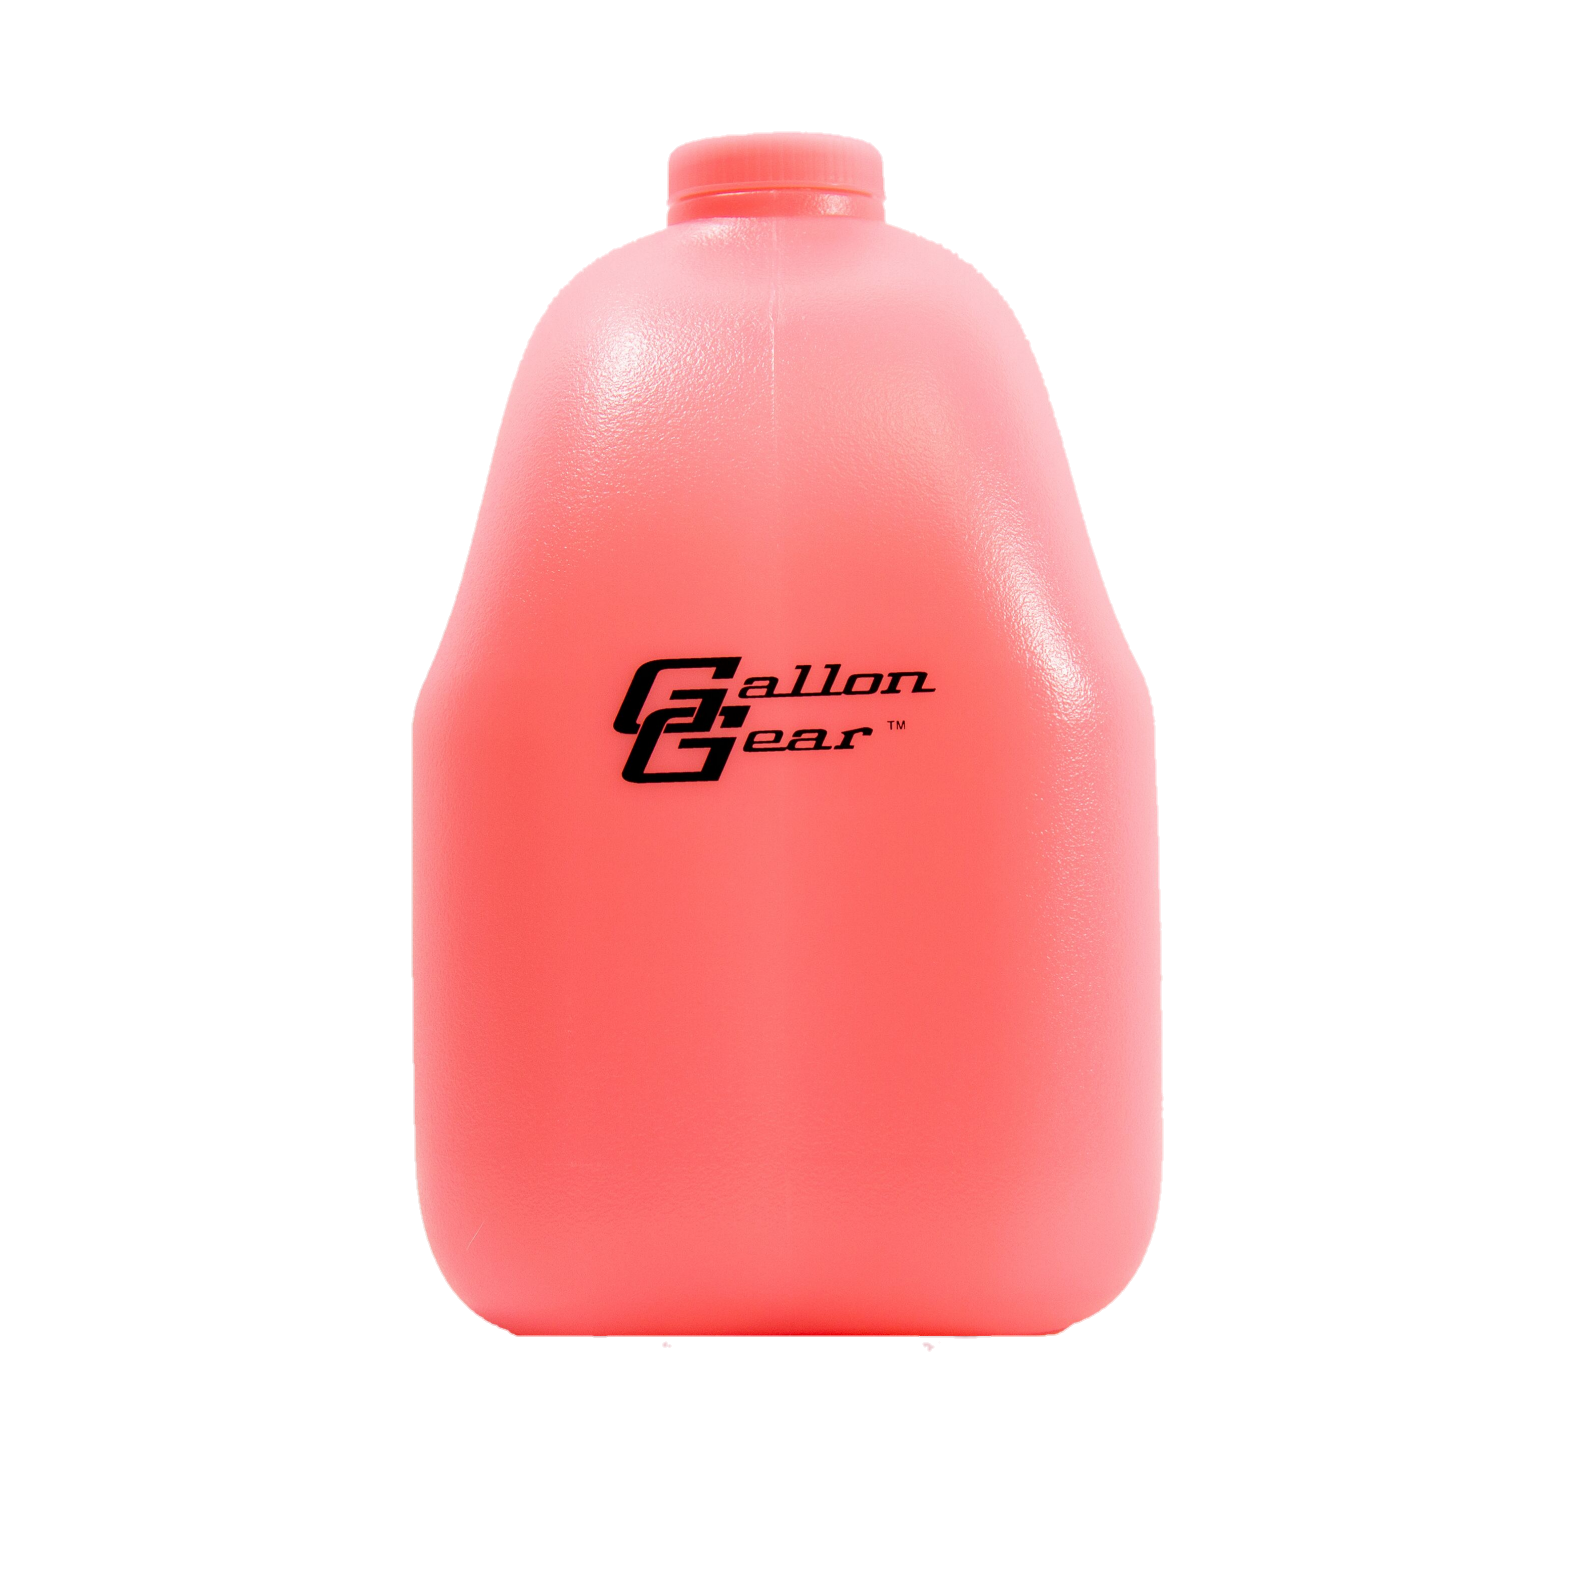 1 Gallon Jug Pink Sleeve Pink Transparent Gallon Bottle Combo